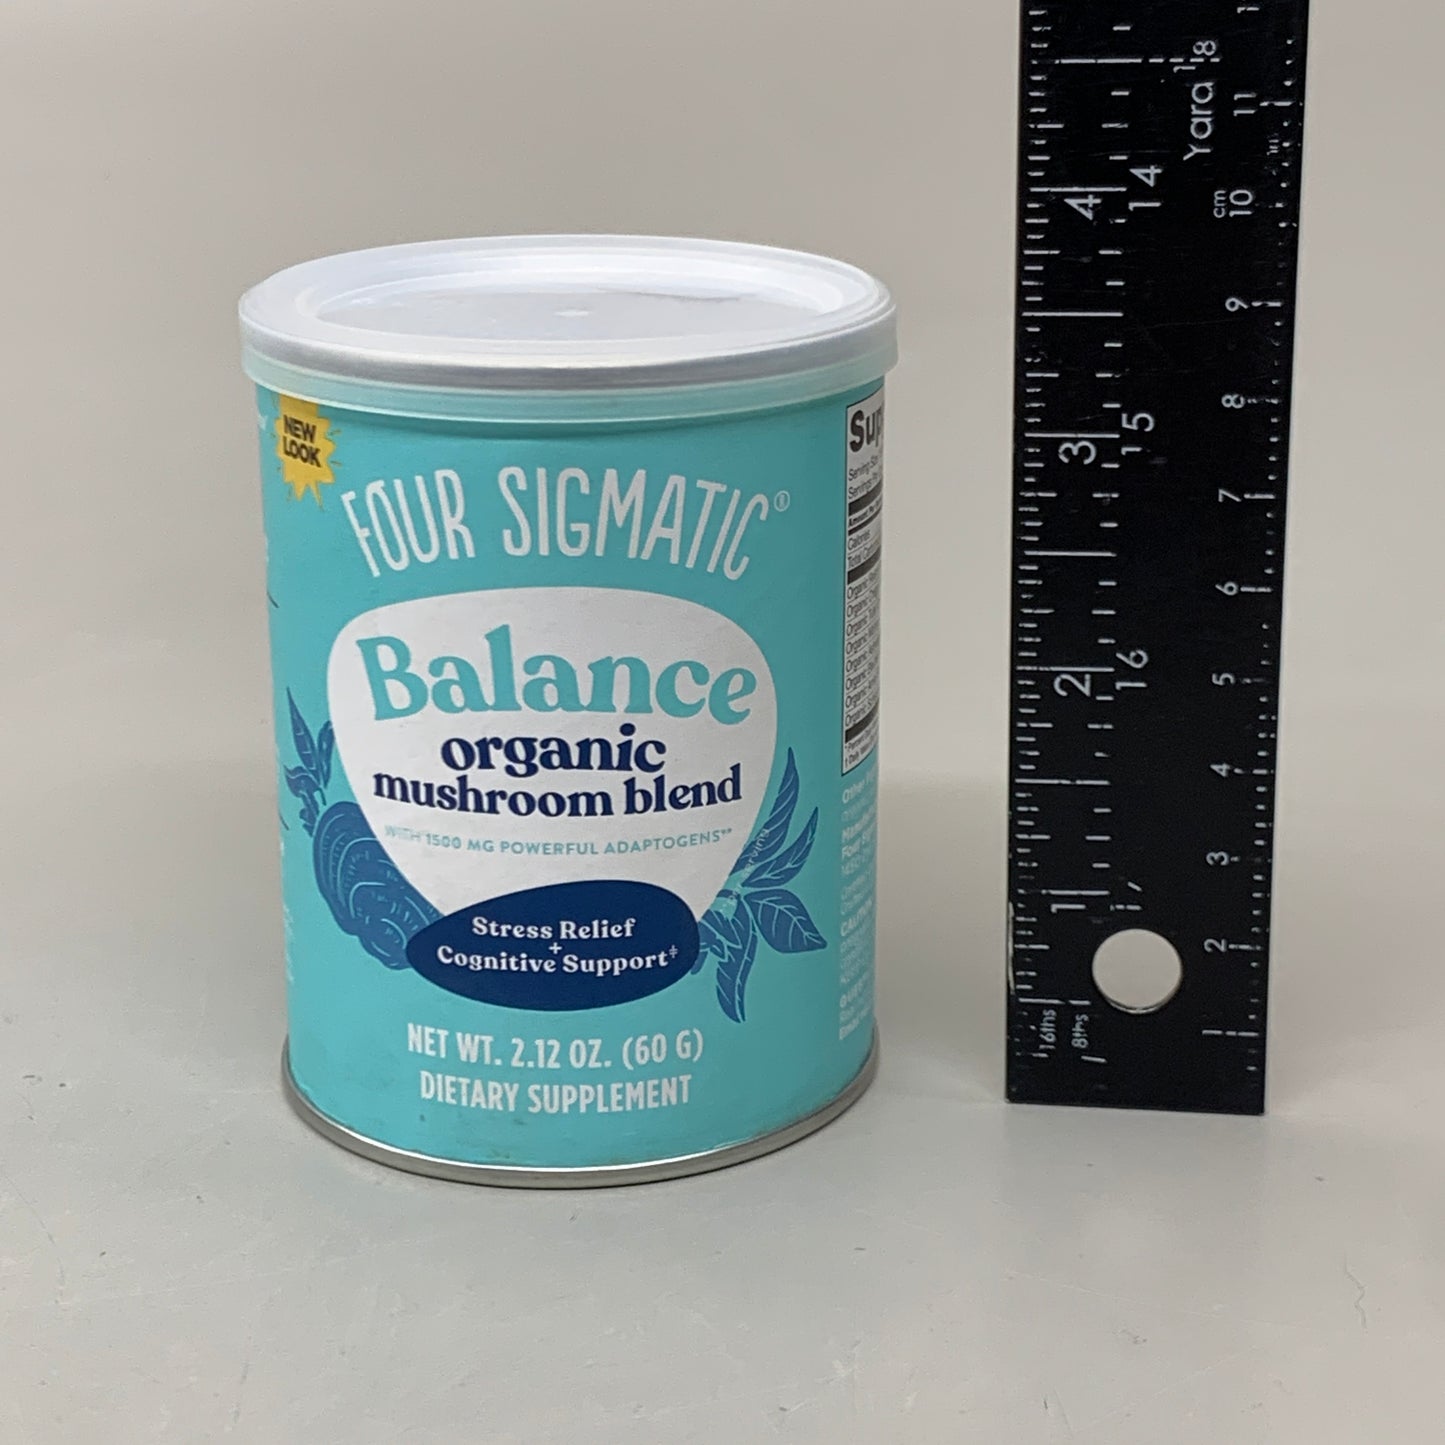 FOUR SIGMATIC (2 PACK) Balance Organic Mushroom Blend Supplement 2.12 oz 02/26